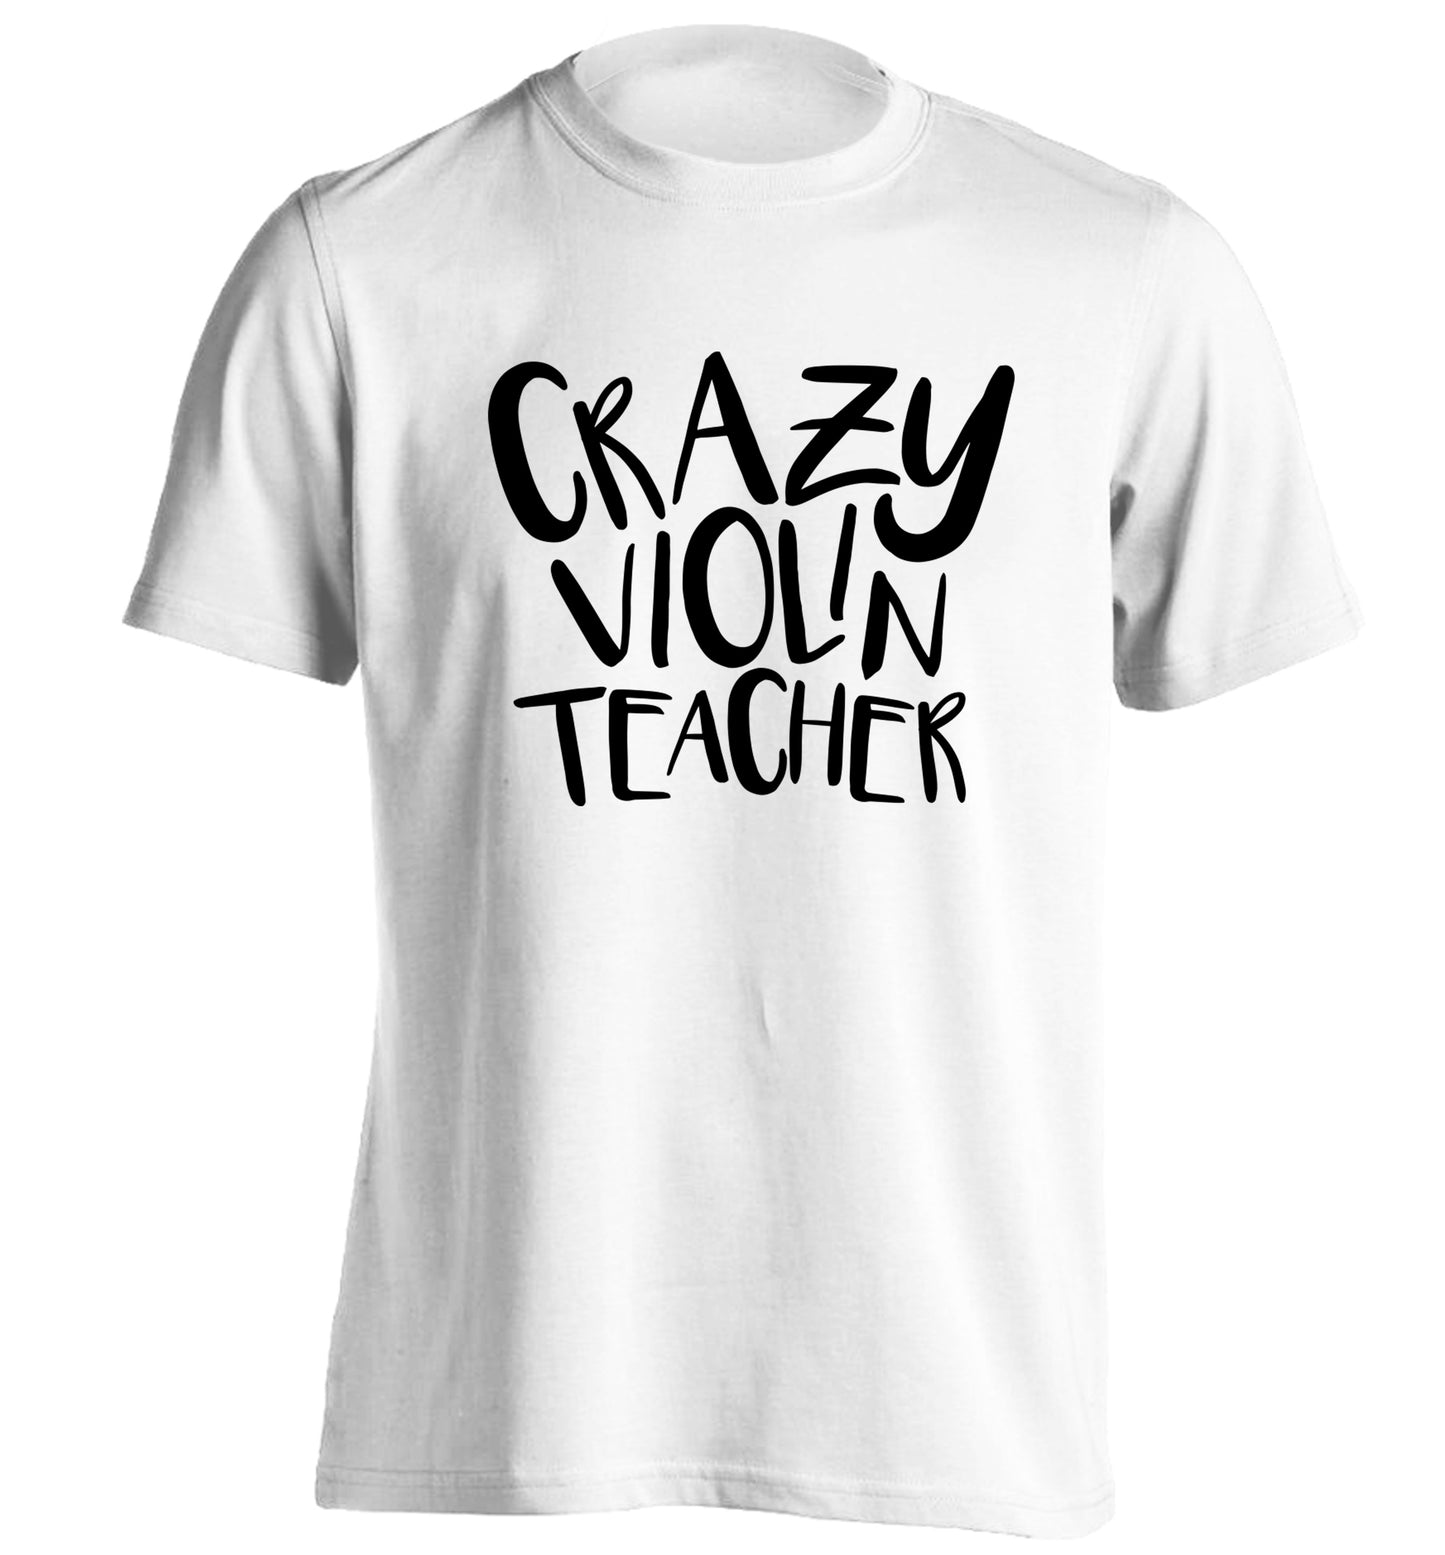 Crazy violin teacher adults unisex white Tshirt 2XL